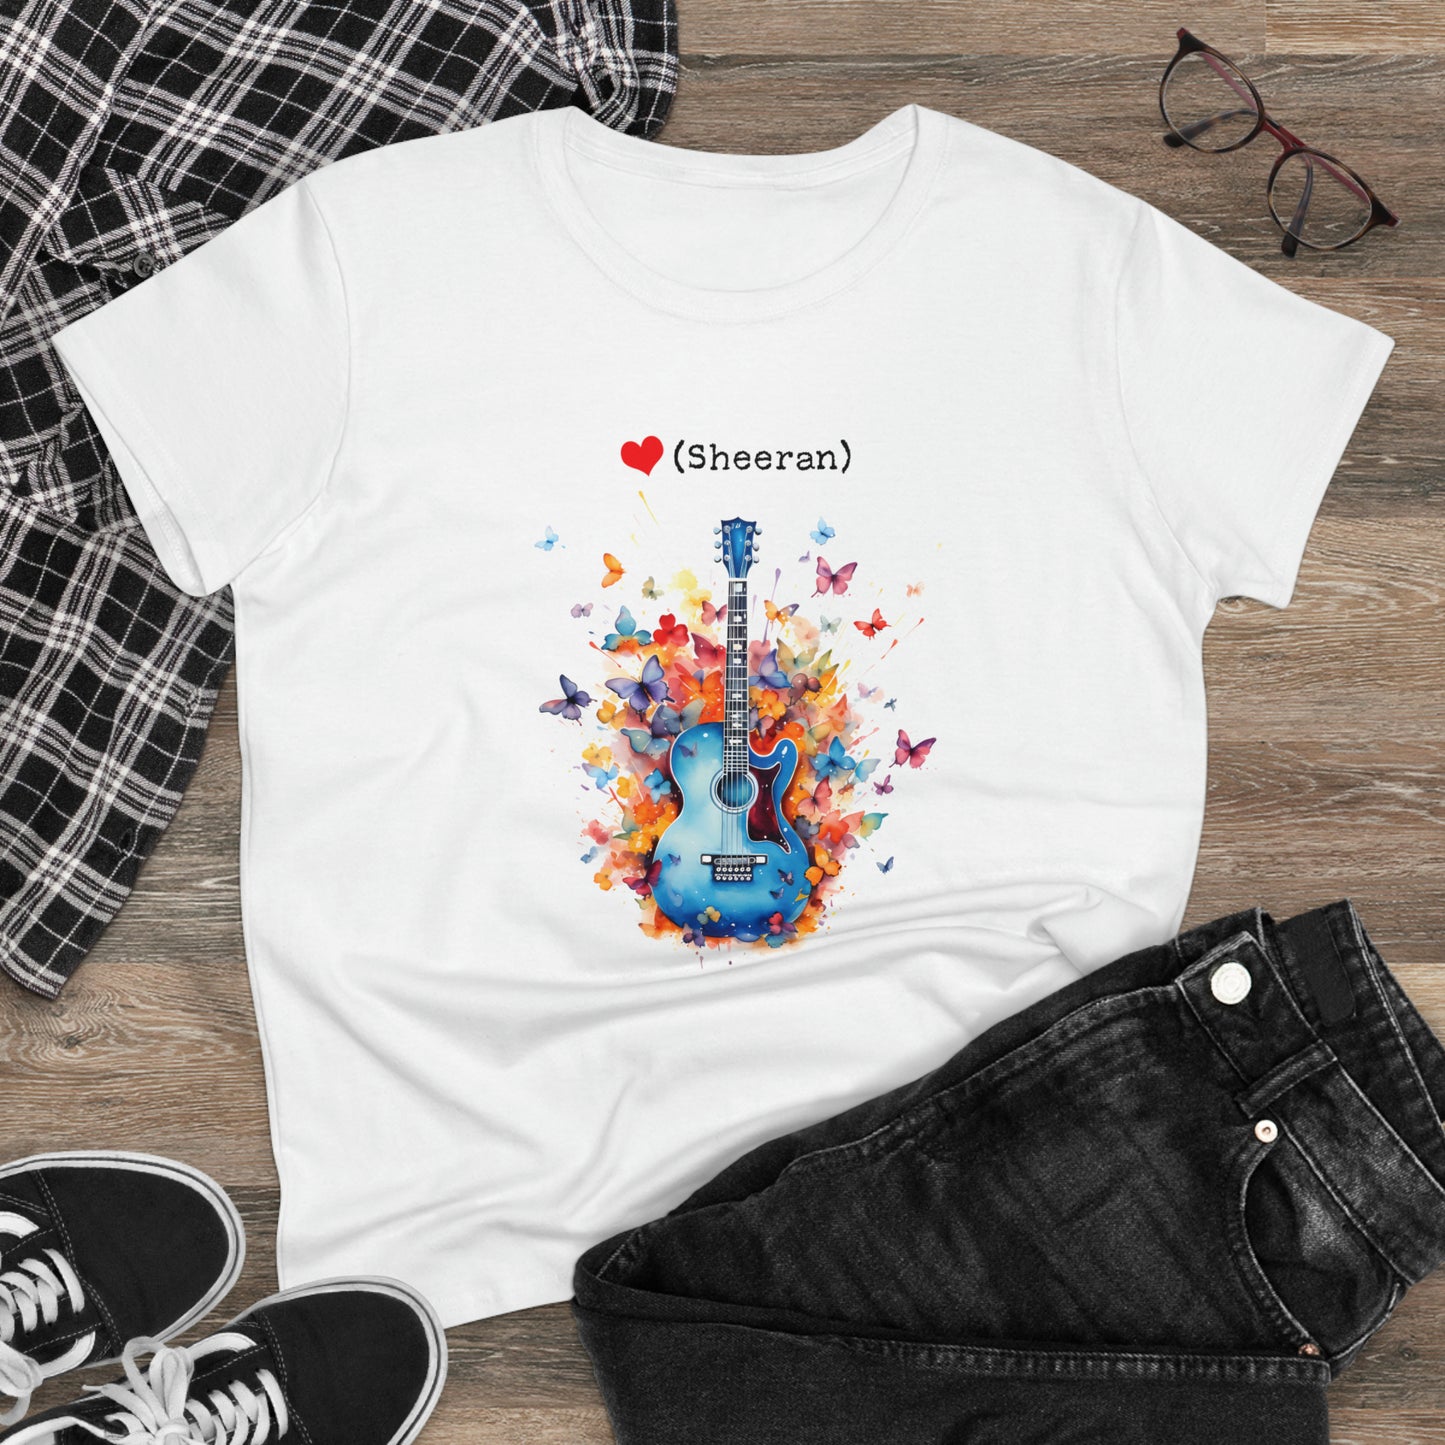 Ed Sheeran Shirt Guitar & Butterflies Watercolor Unique Custom Design Women's Midweight Cotton